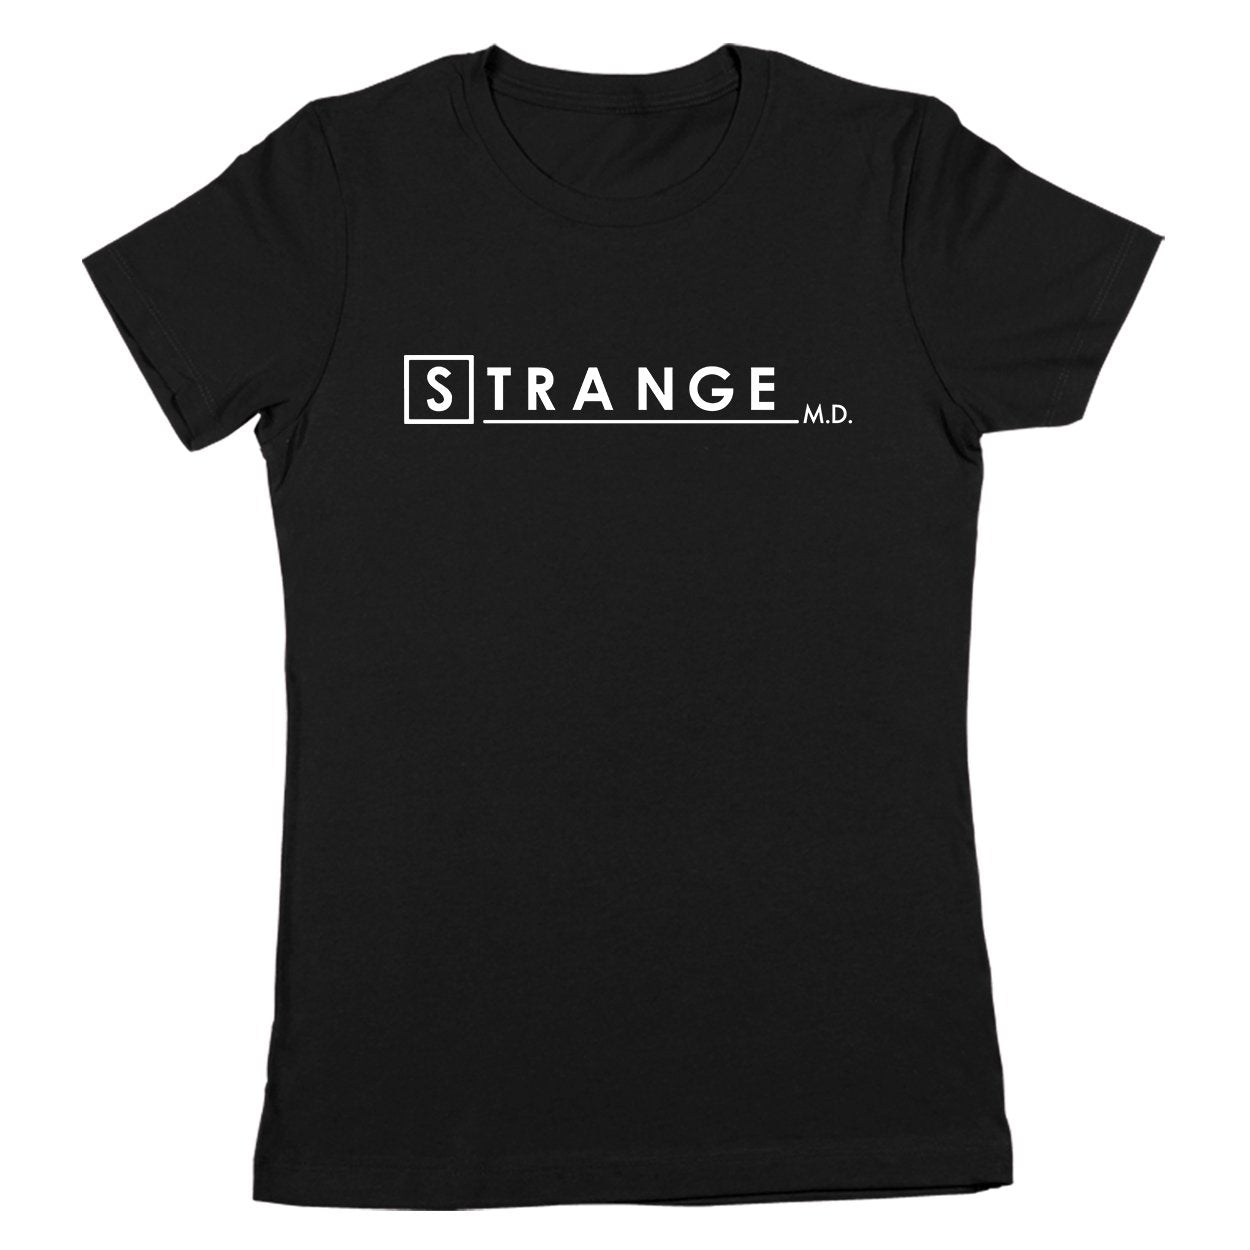 Strange Md Women's Fit T-Shirt